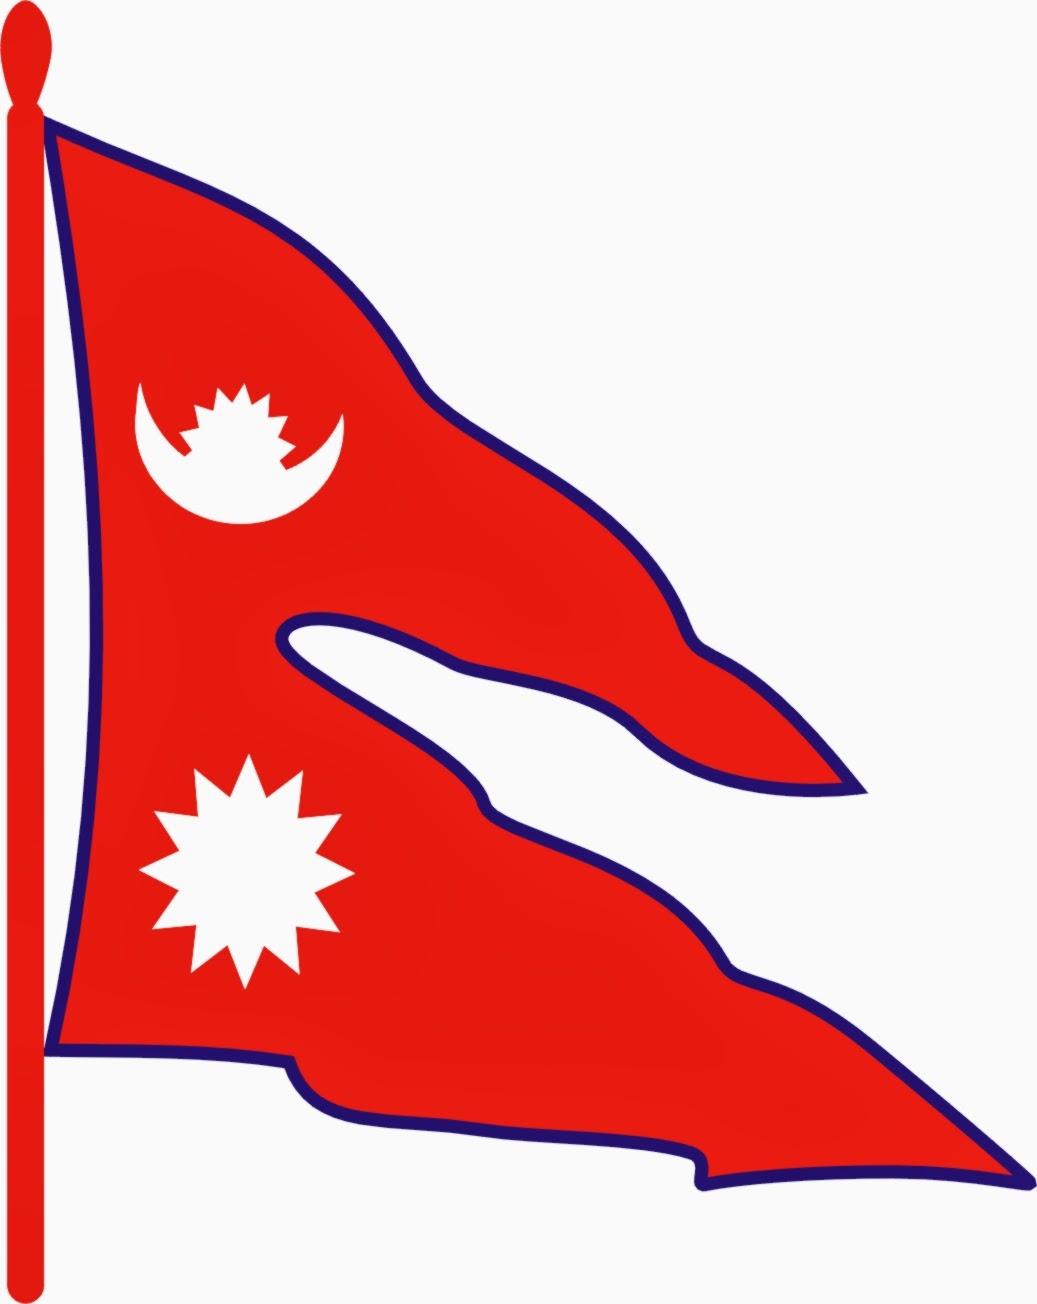 The National Flag of Nepal of Nepal Flag. Chandra Thapa Blog's